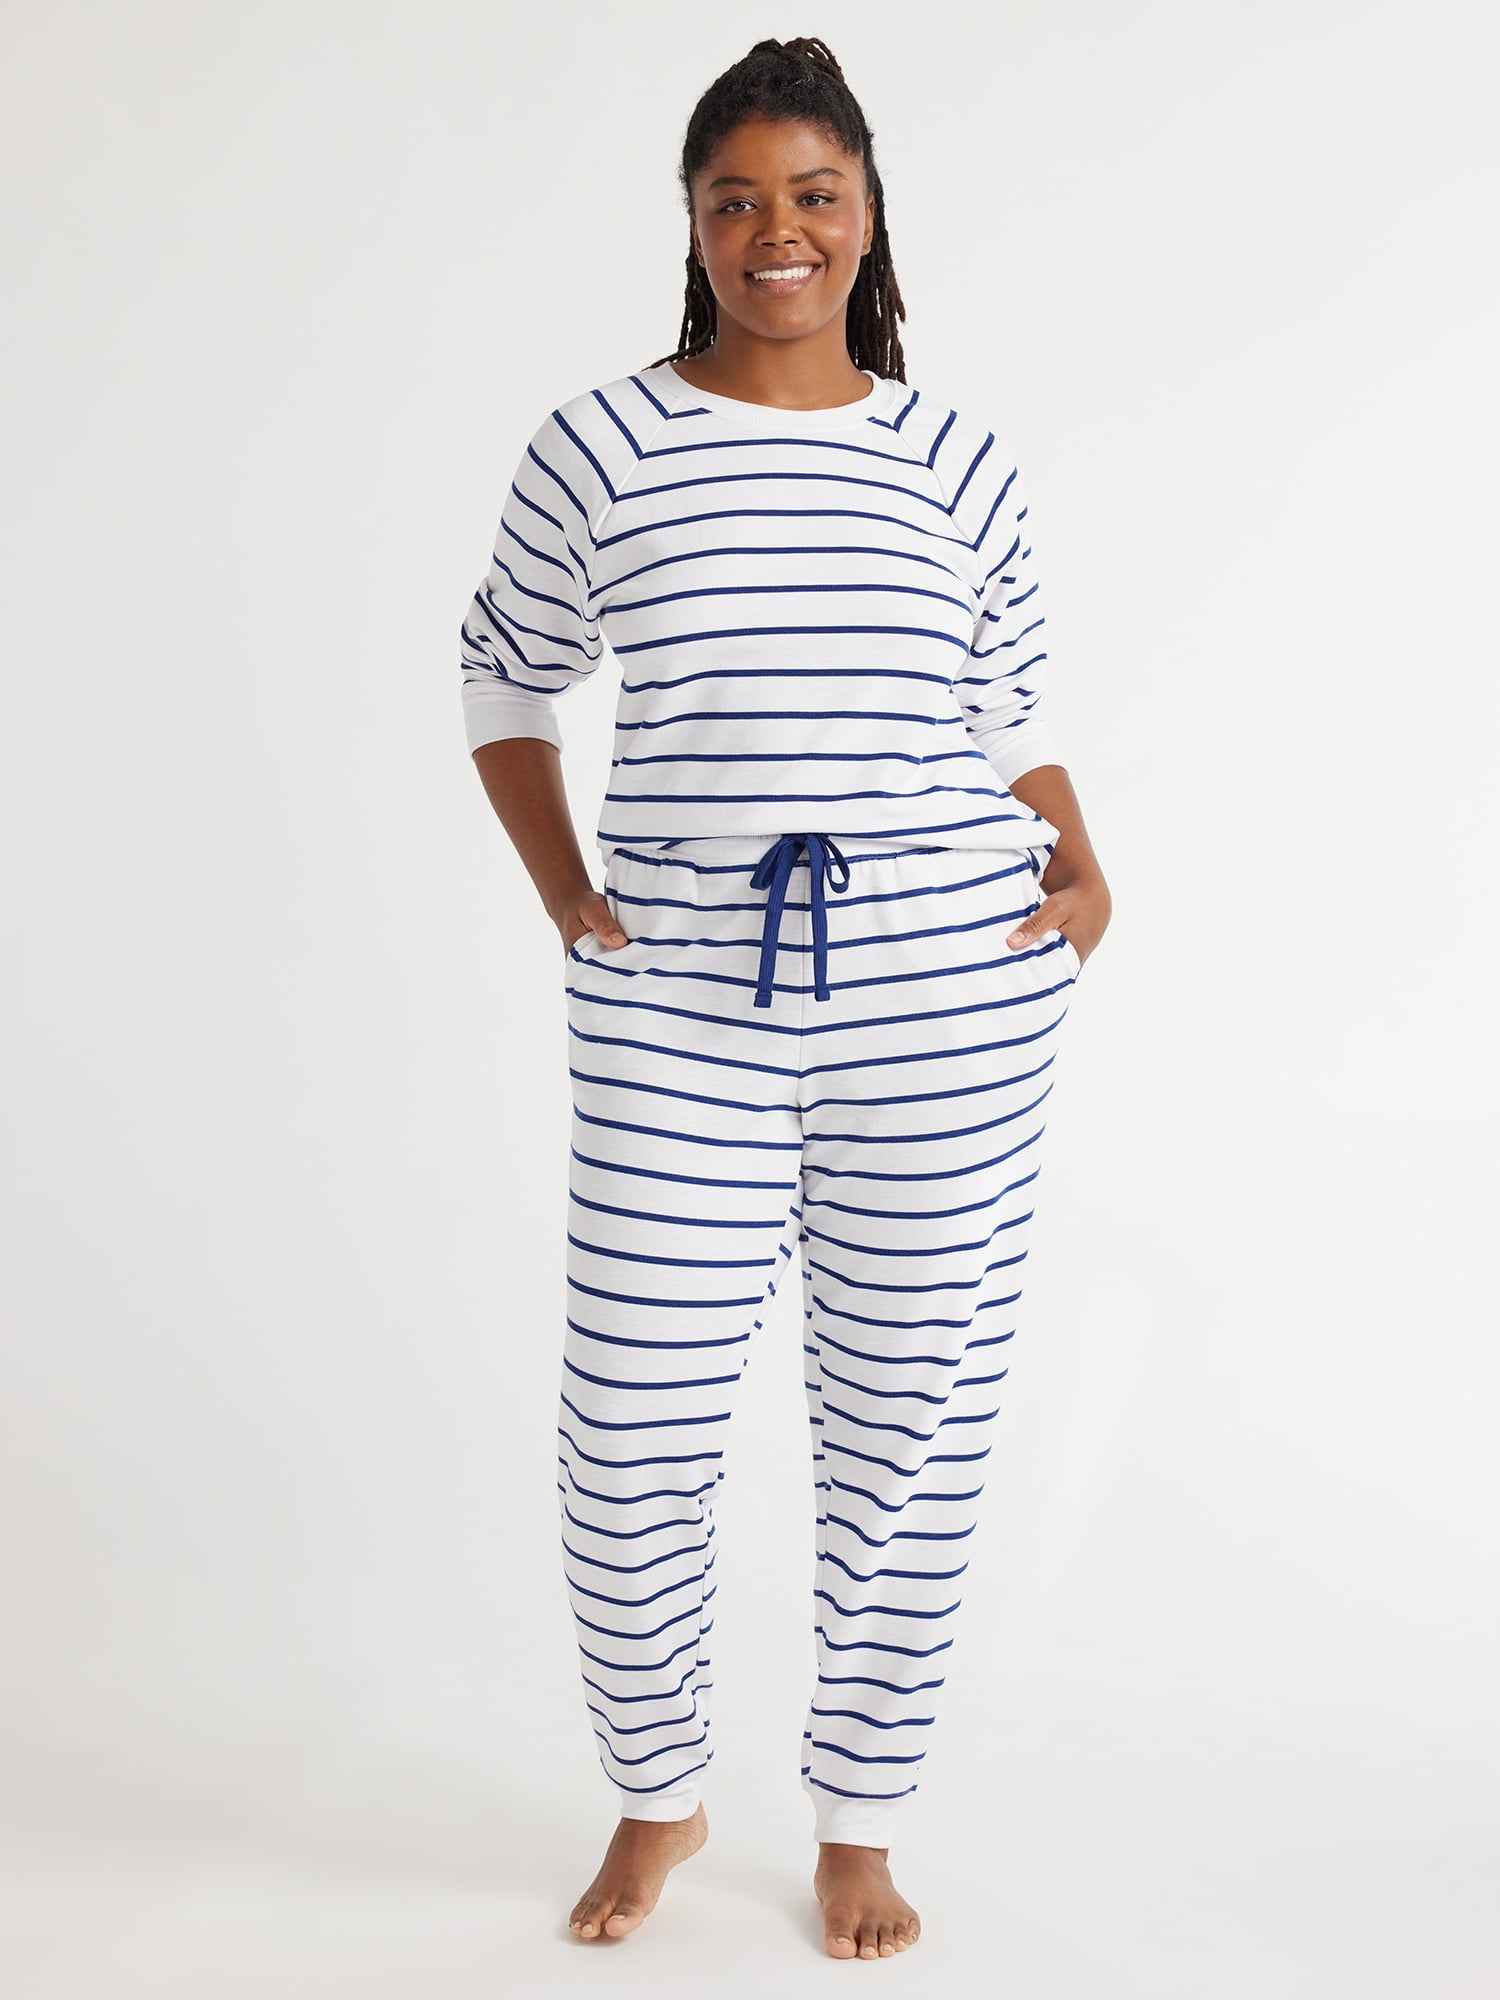 Joyspun Vivid White Tank Top & Shorts Pyjama Set - Bras